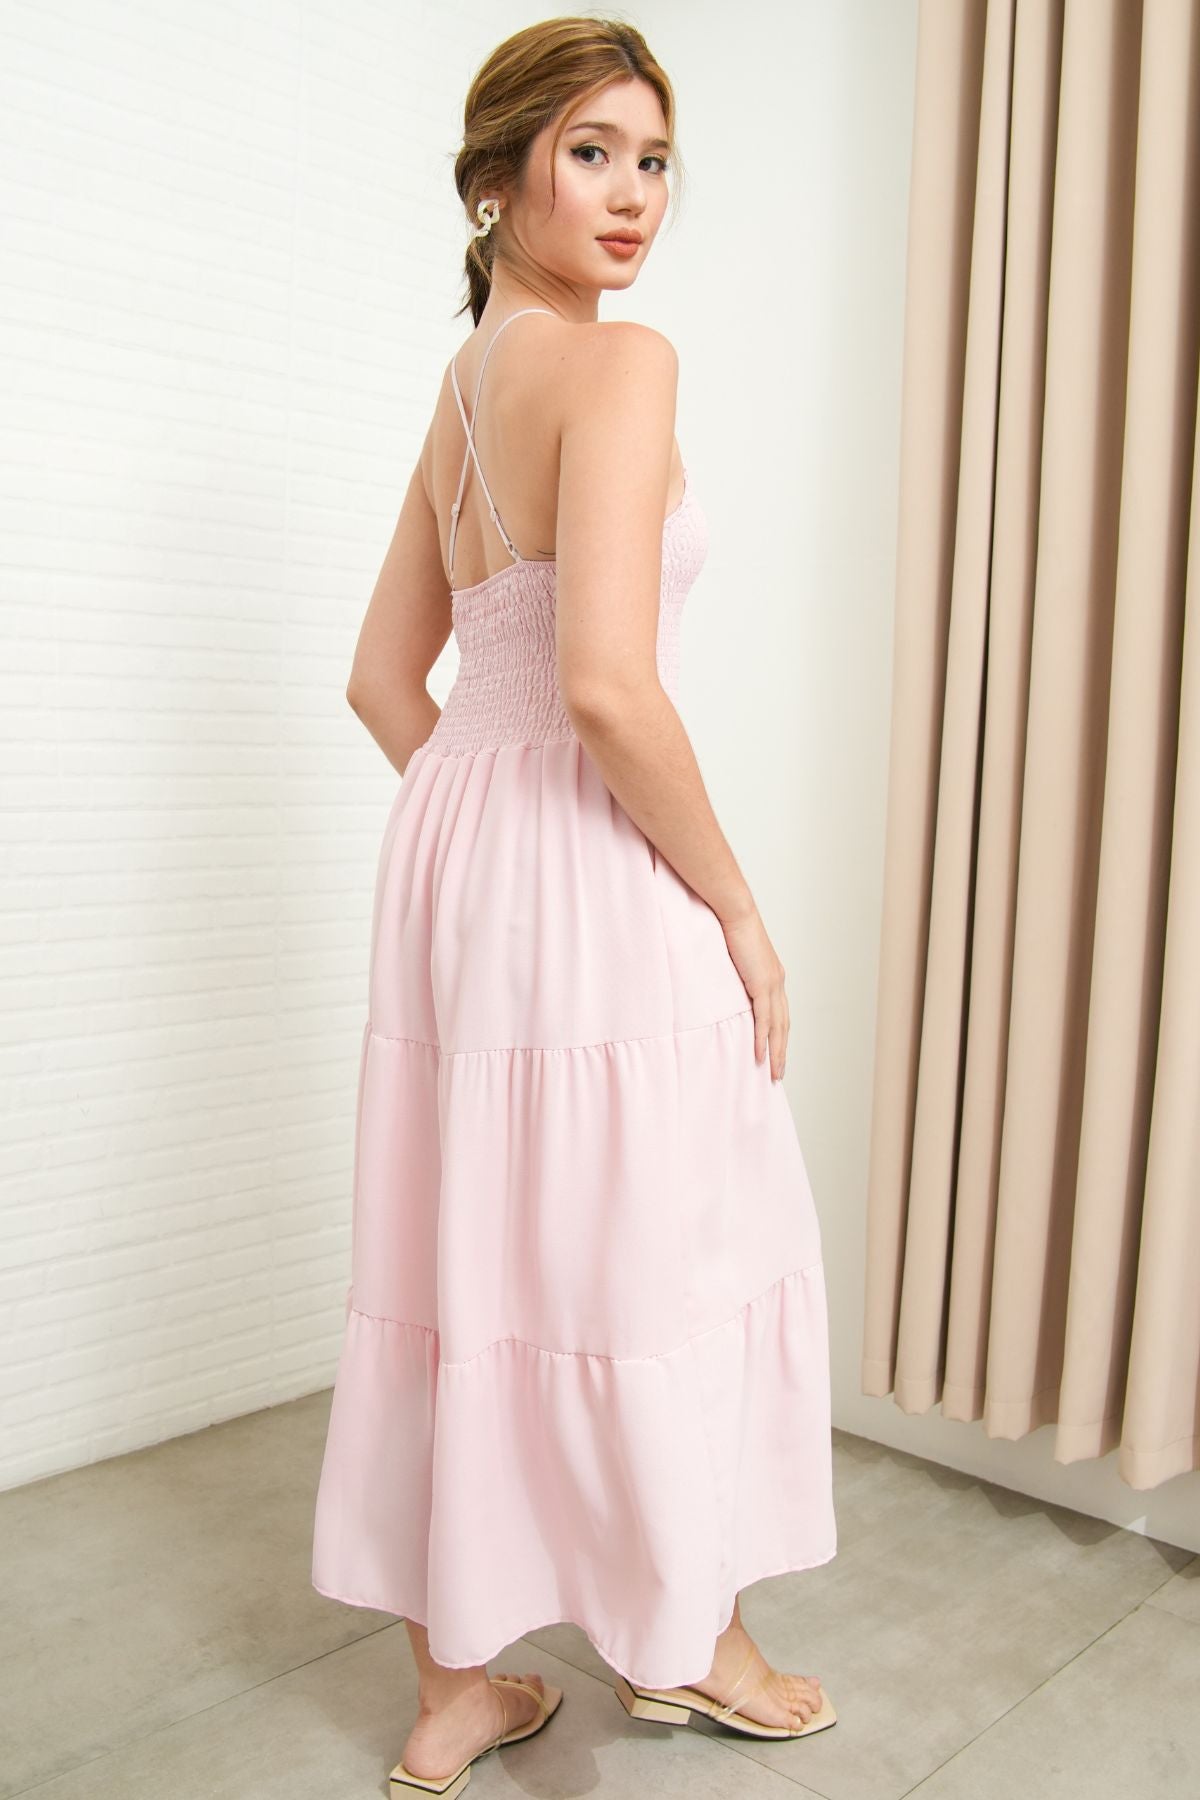 RAMONA Smocked Halter Criss-cross Back Dress (Light Pink)